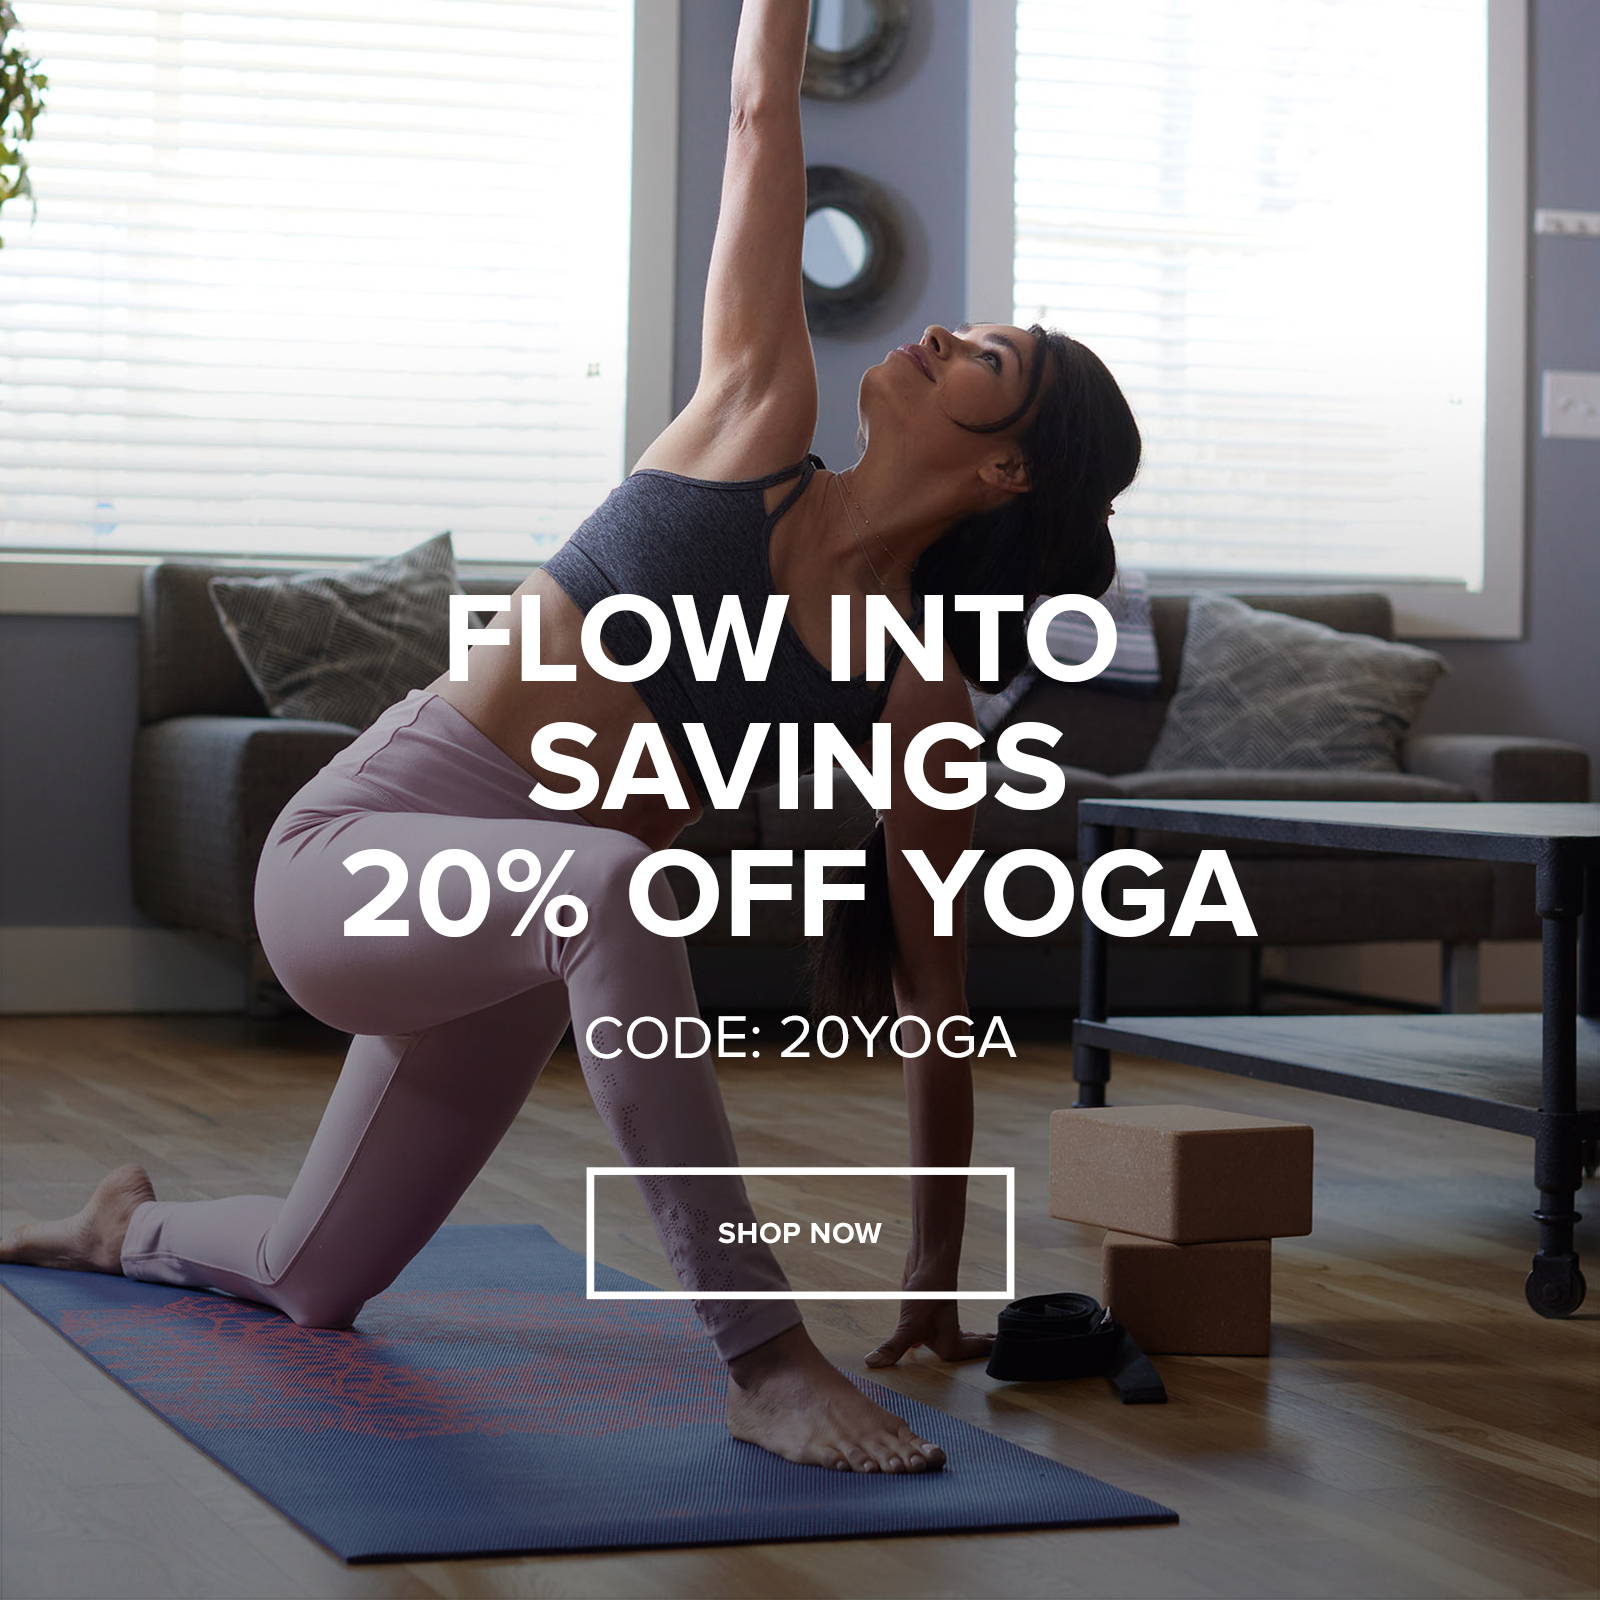 20% off Yoga Code: 20YOGA